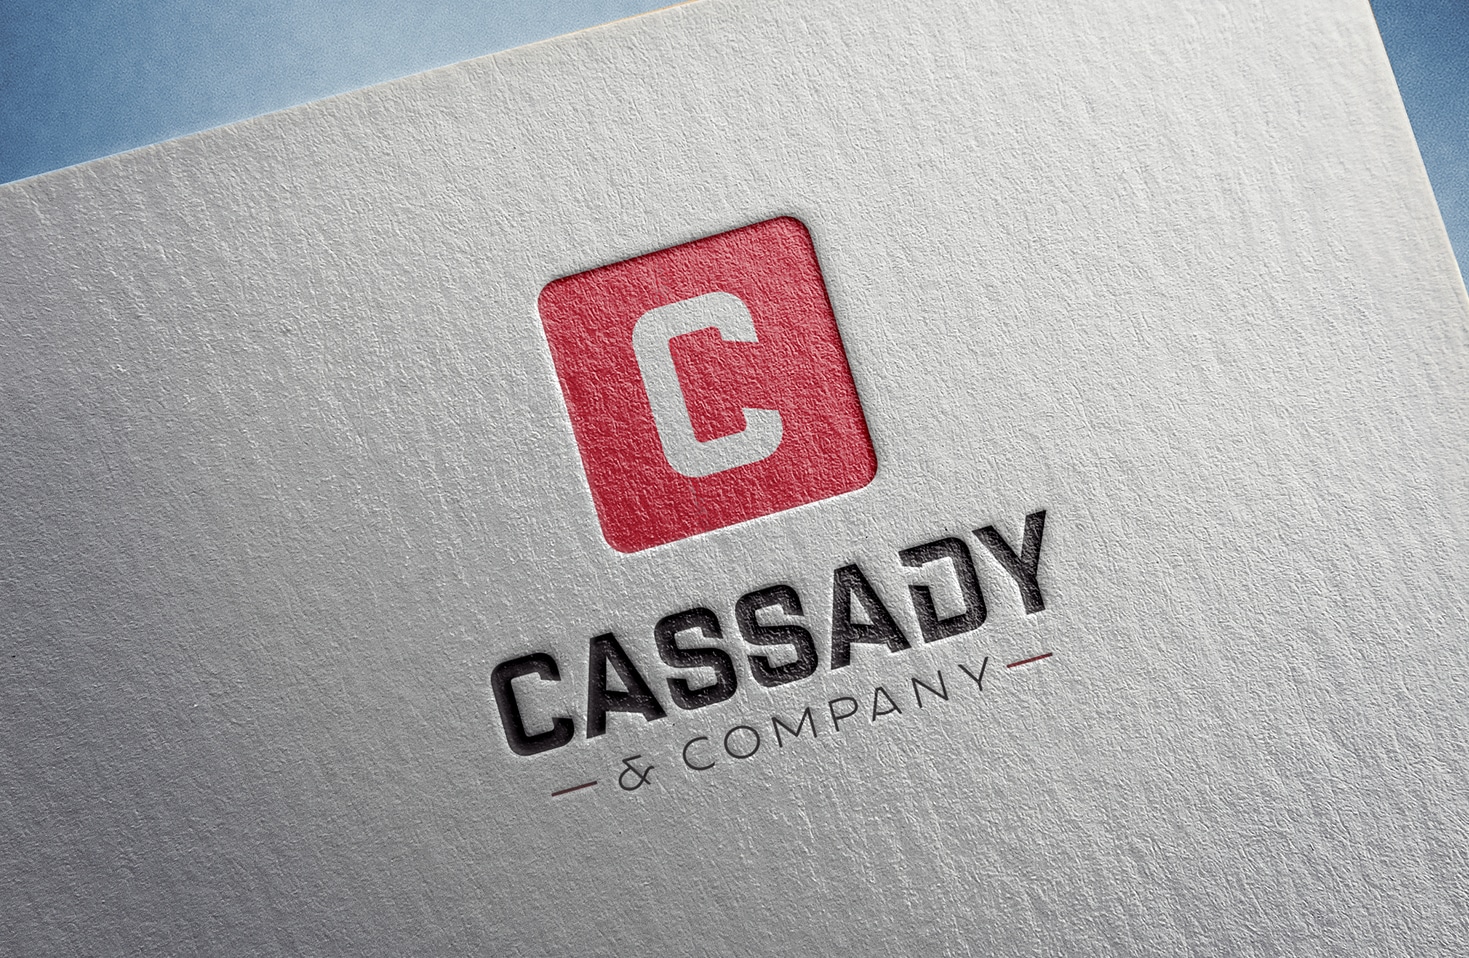 Cassady logo in print